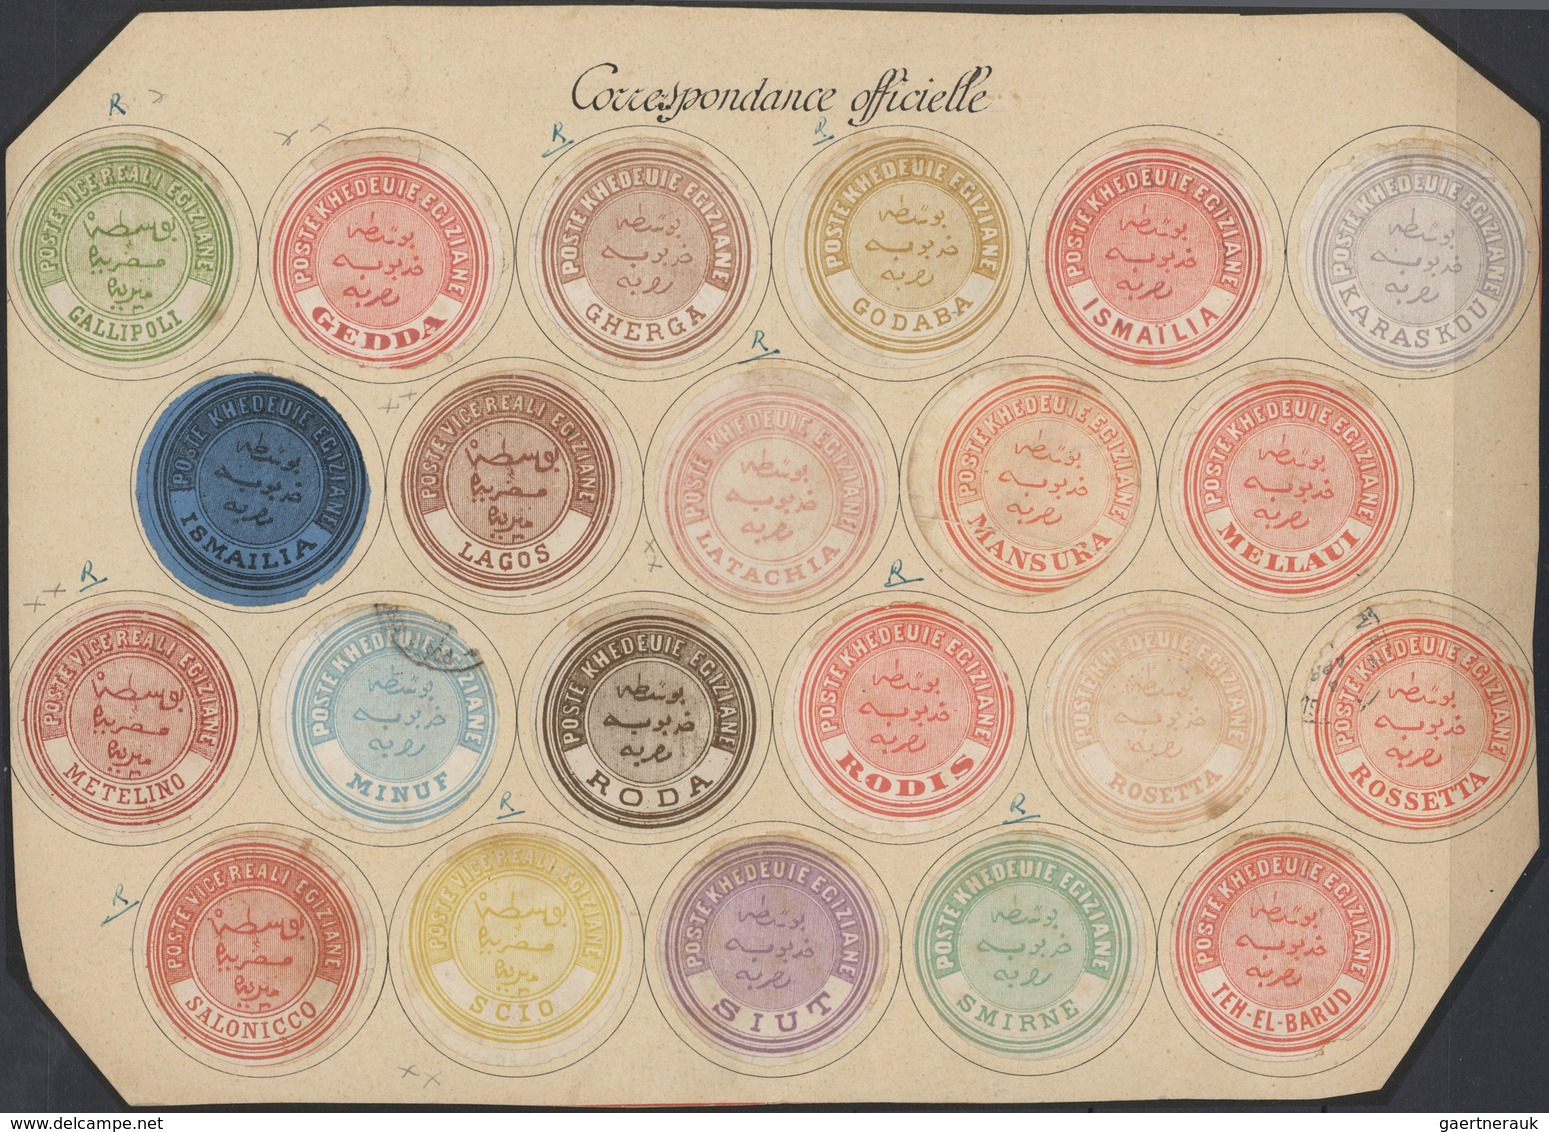 (*)/O Ägypten - Dienstmarken: 1864/1892 (ca.), INTERPOSTALS, collection of apprx. 148 interpostal seals in